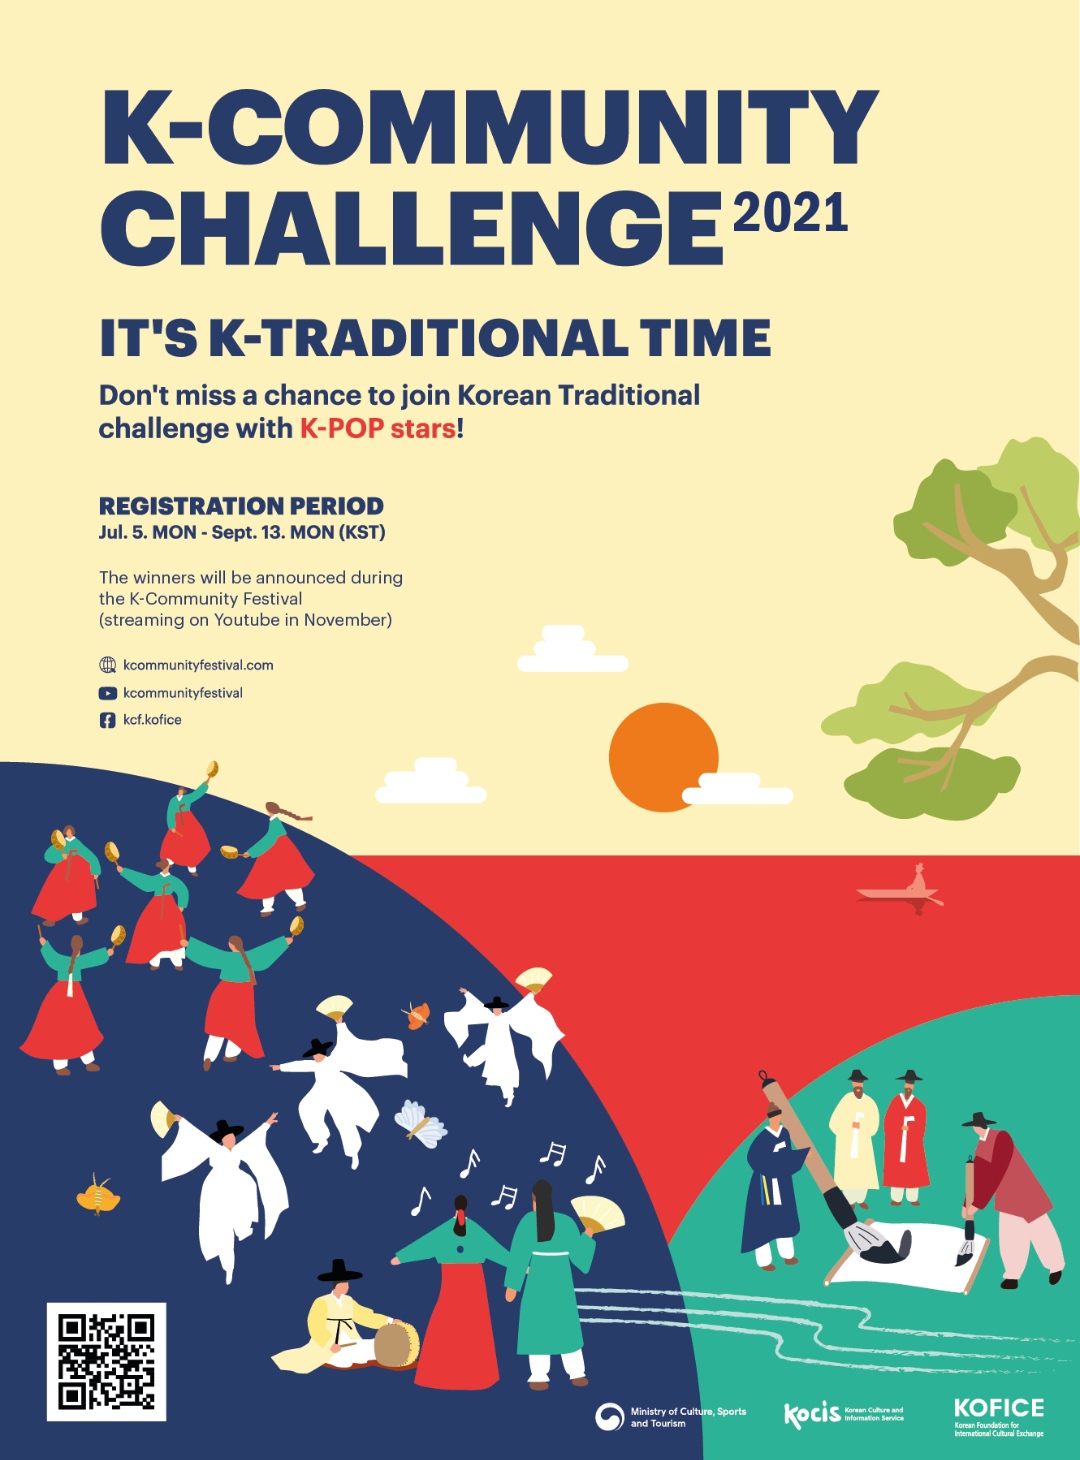 K-COMMUNITY CHALLENGE 2021